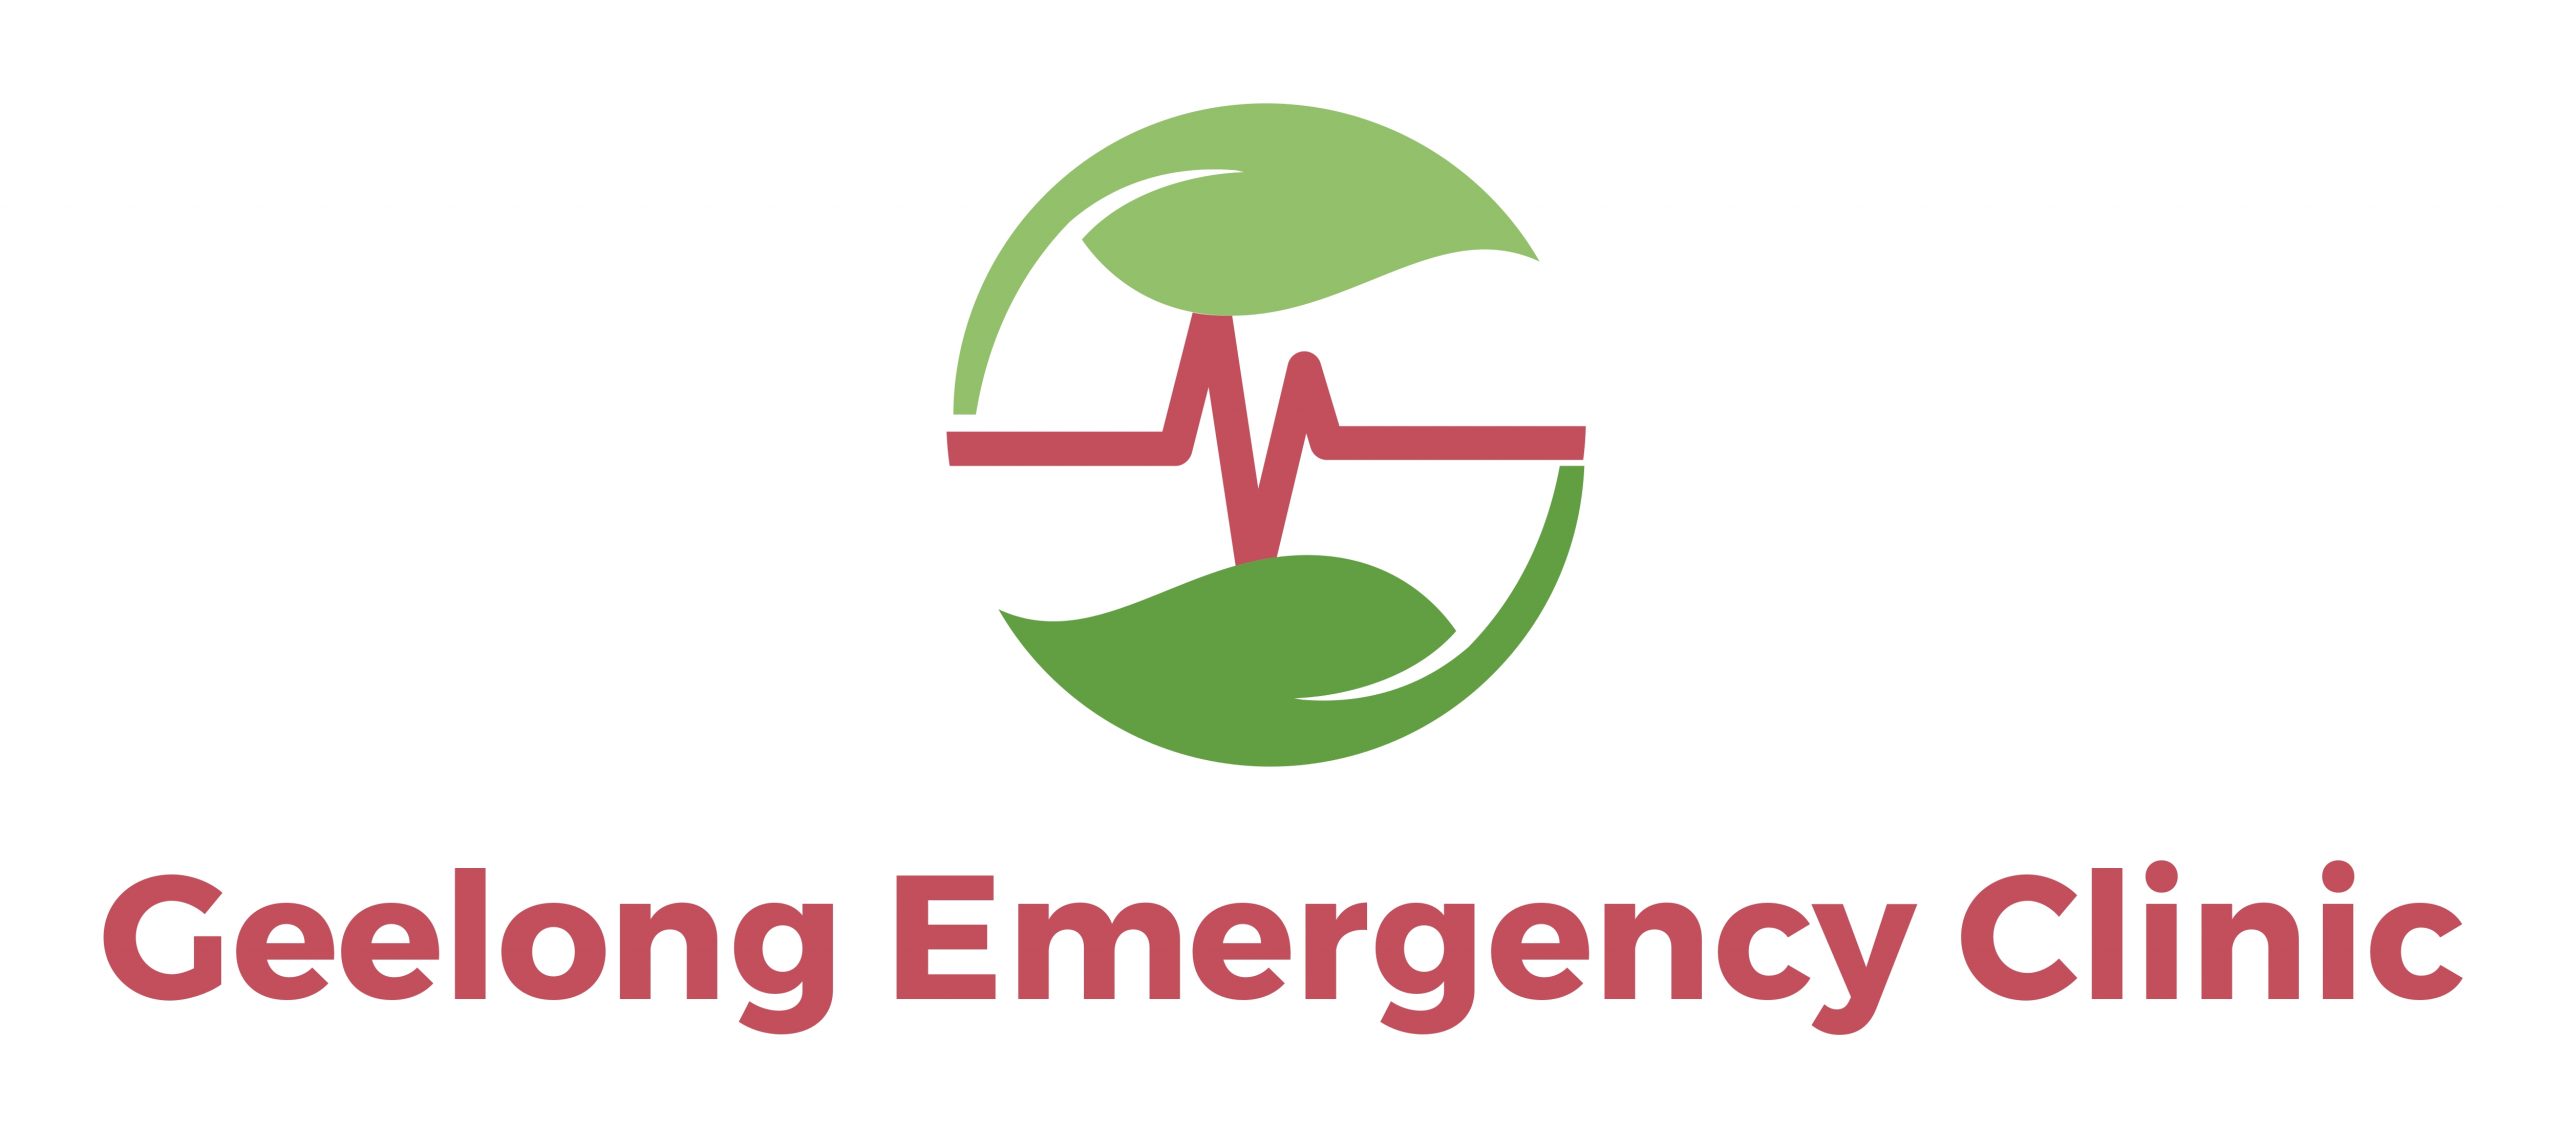 Geelong Emergency Clinic